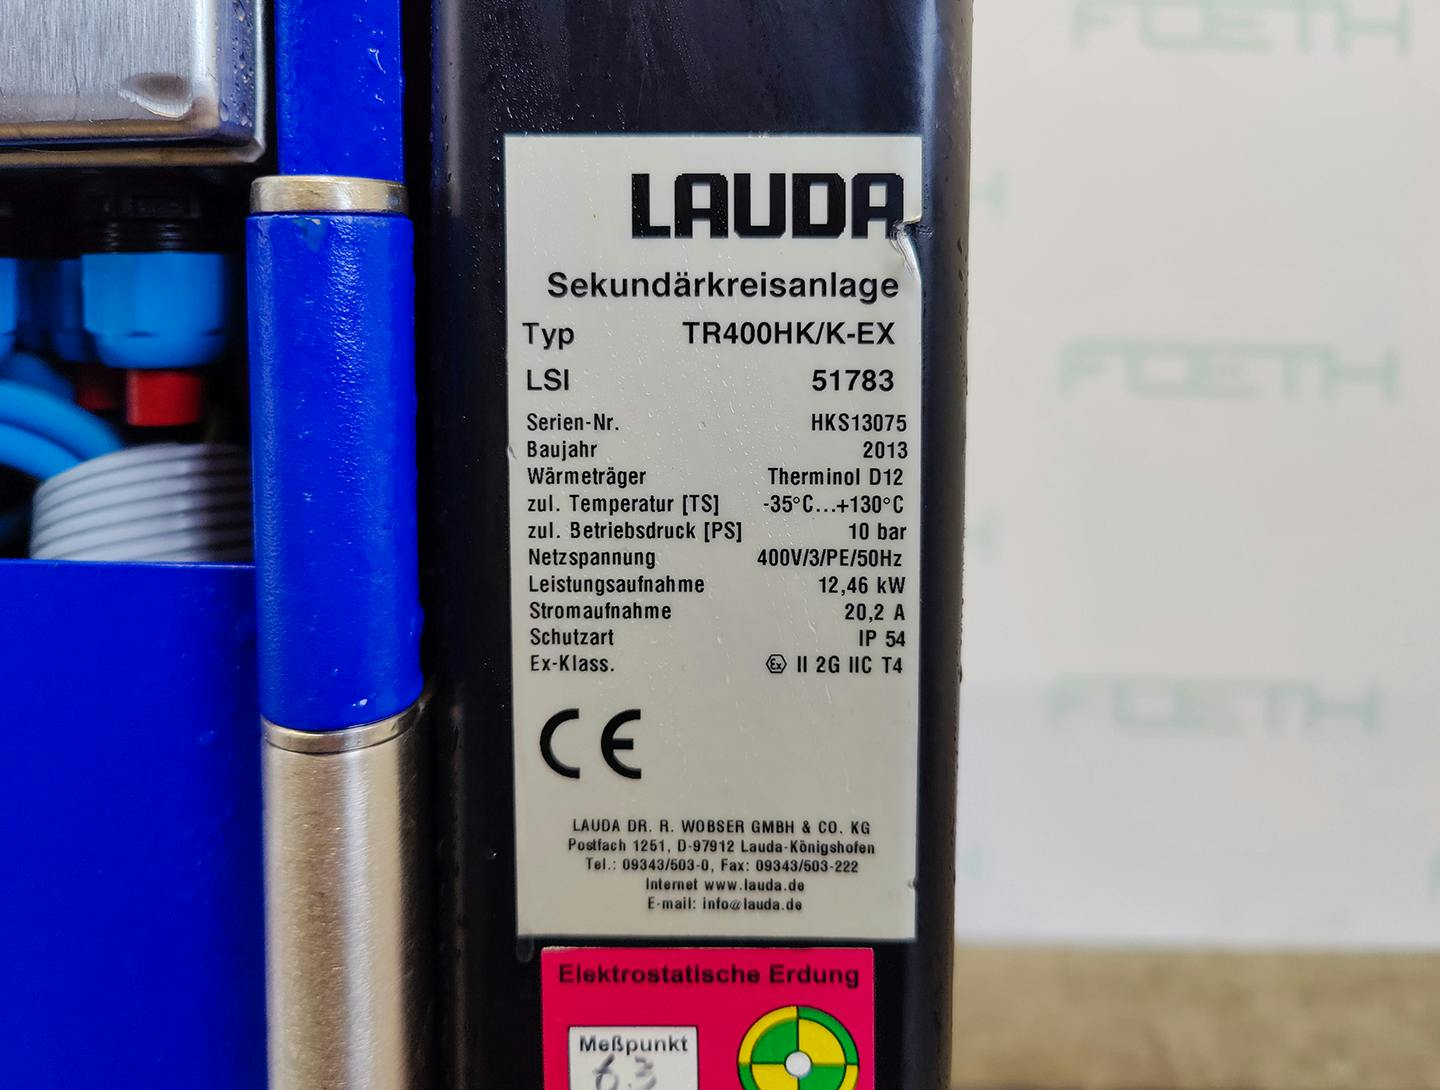 Lauda TR400 HK/K-EX "secondary circuit system" - Tempereerapparaat - image 6